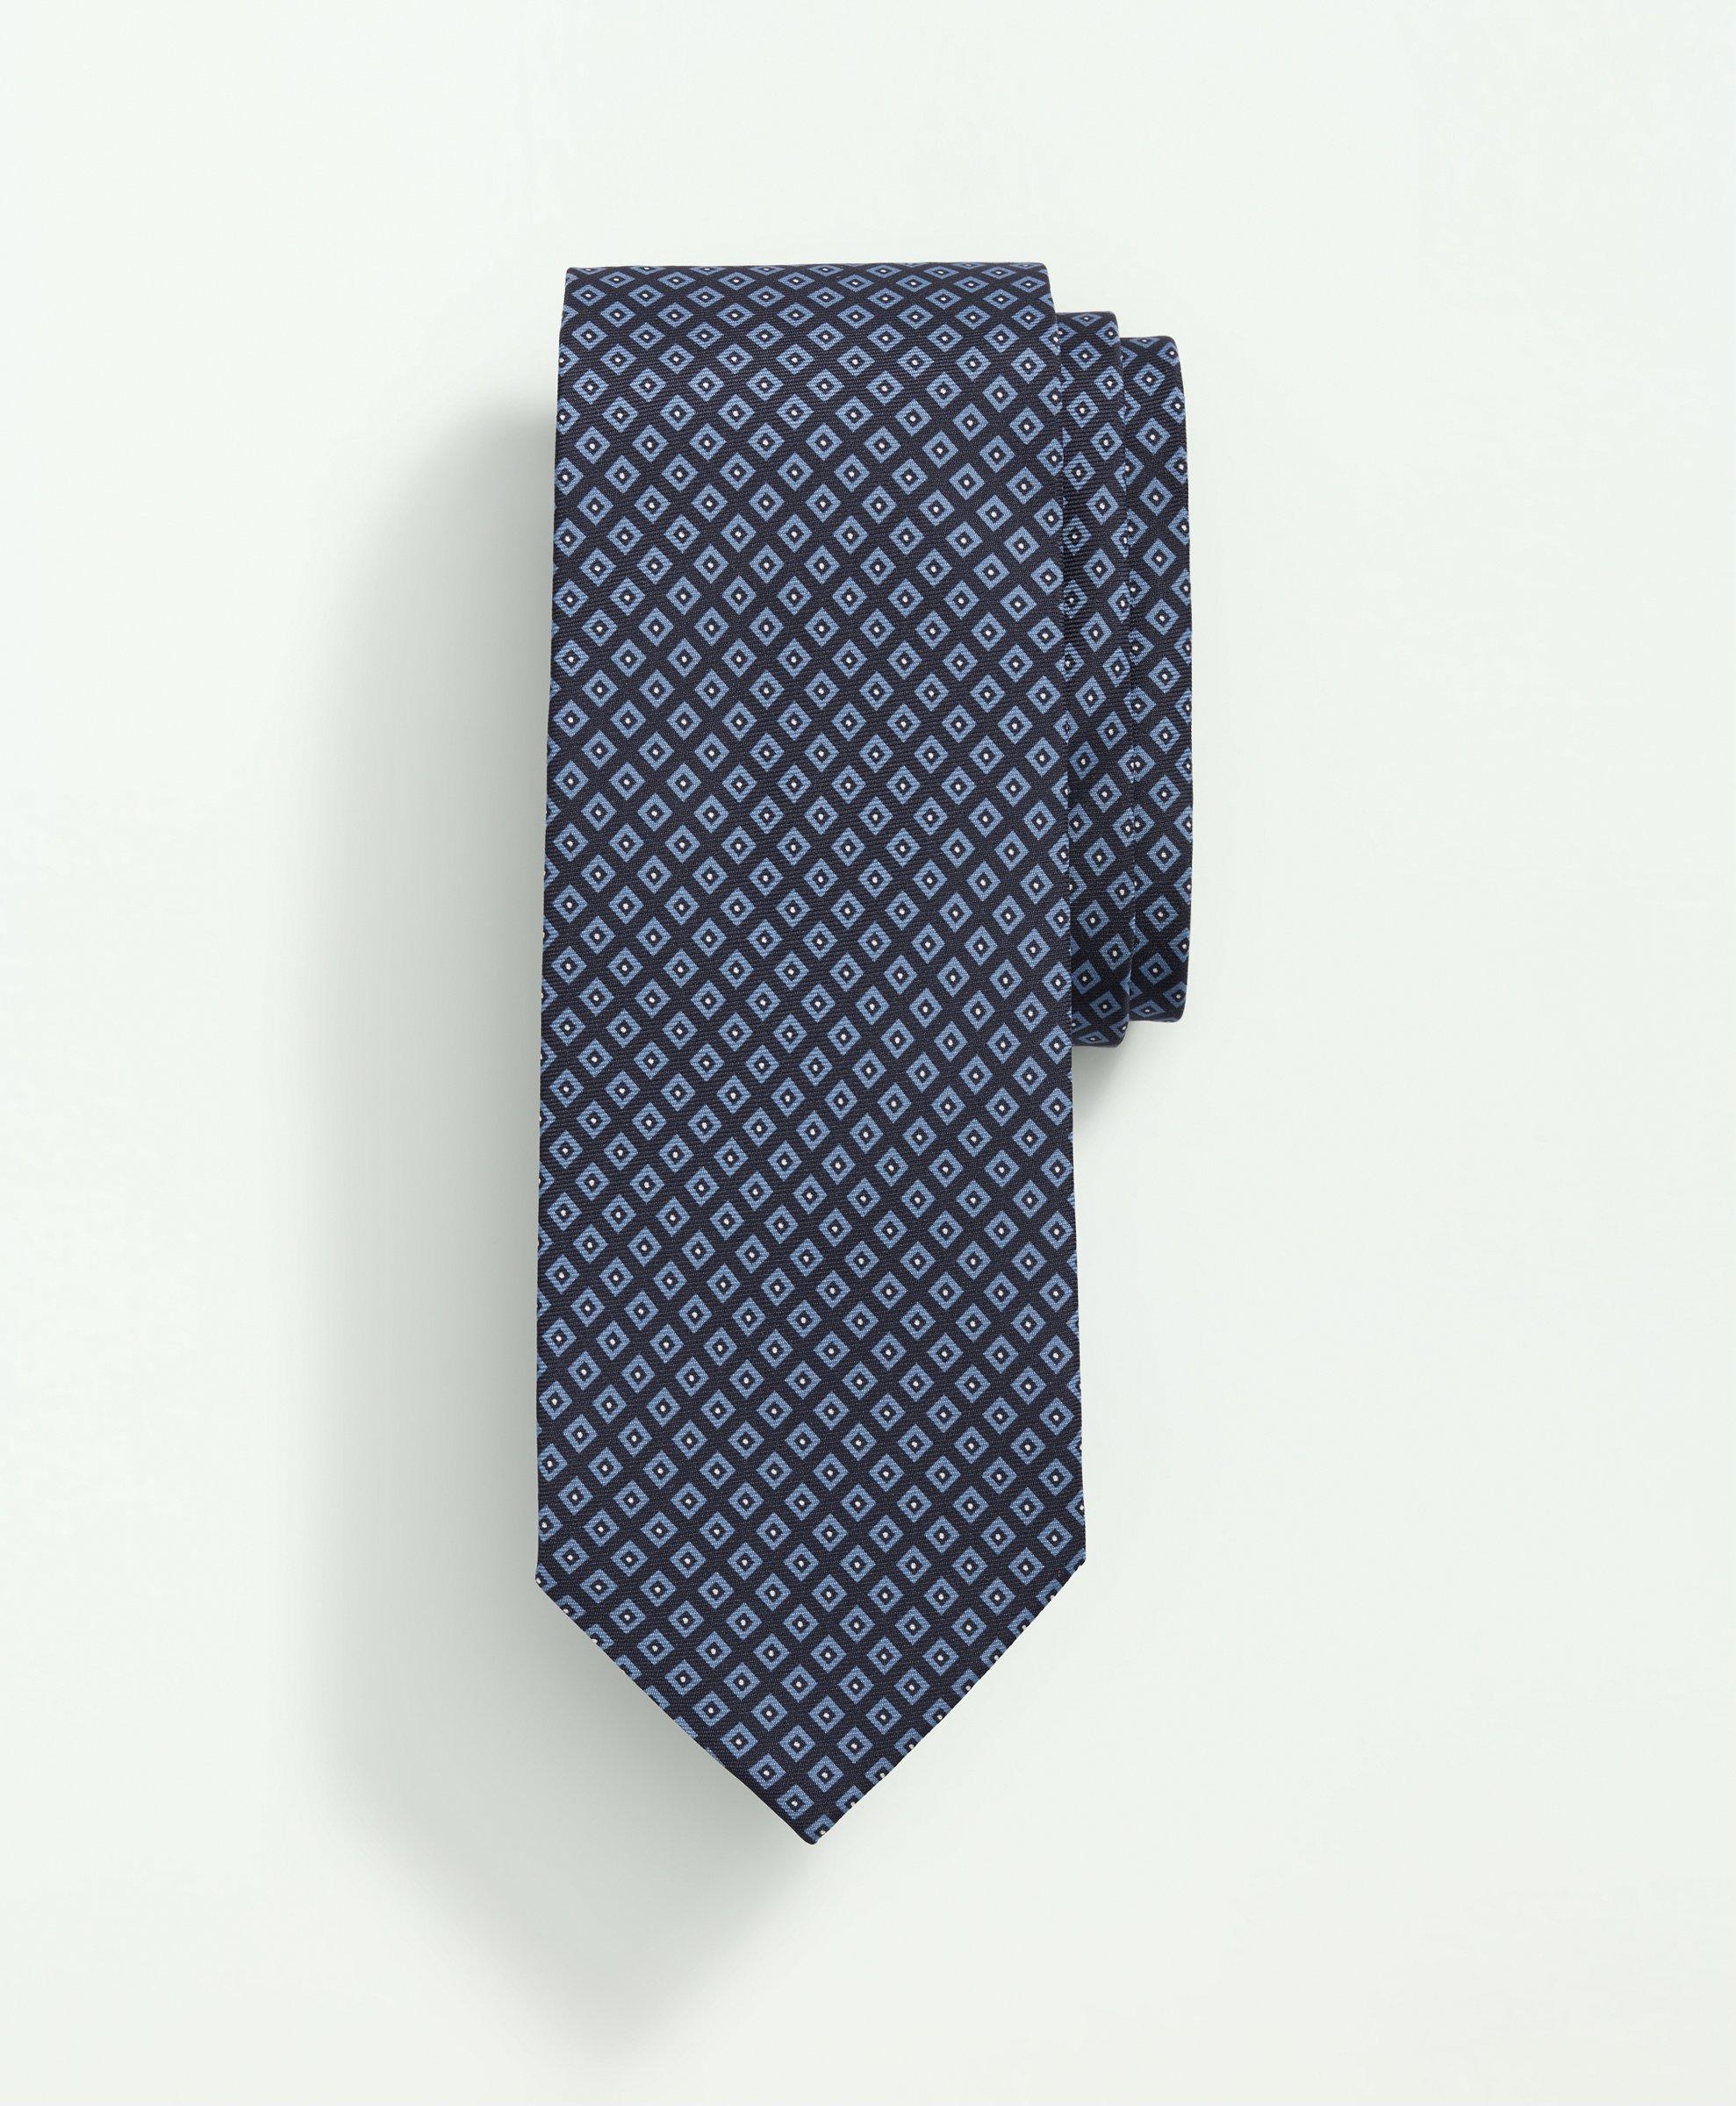 3-Fold Floral Patterned Printed Silk Tie - Brown/Navy/Light Blue